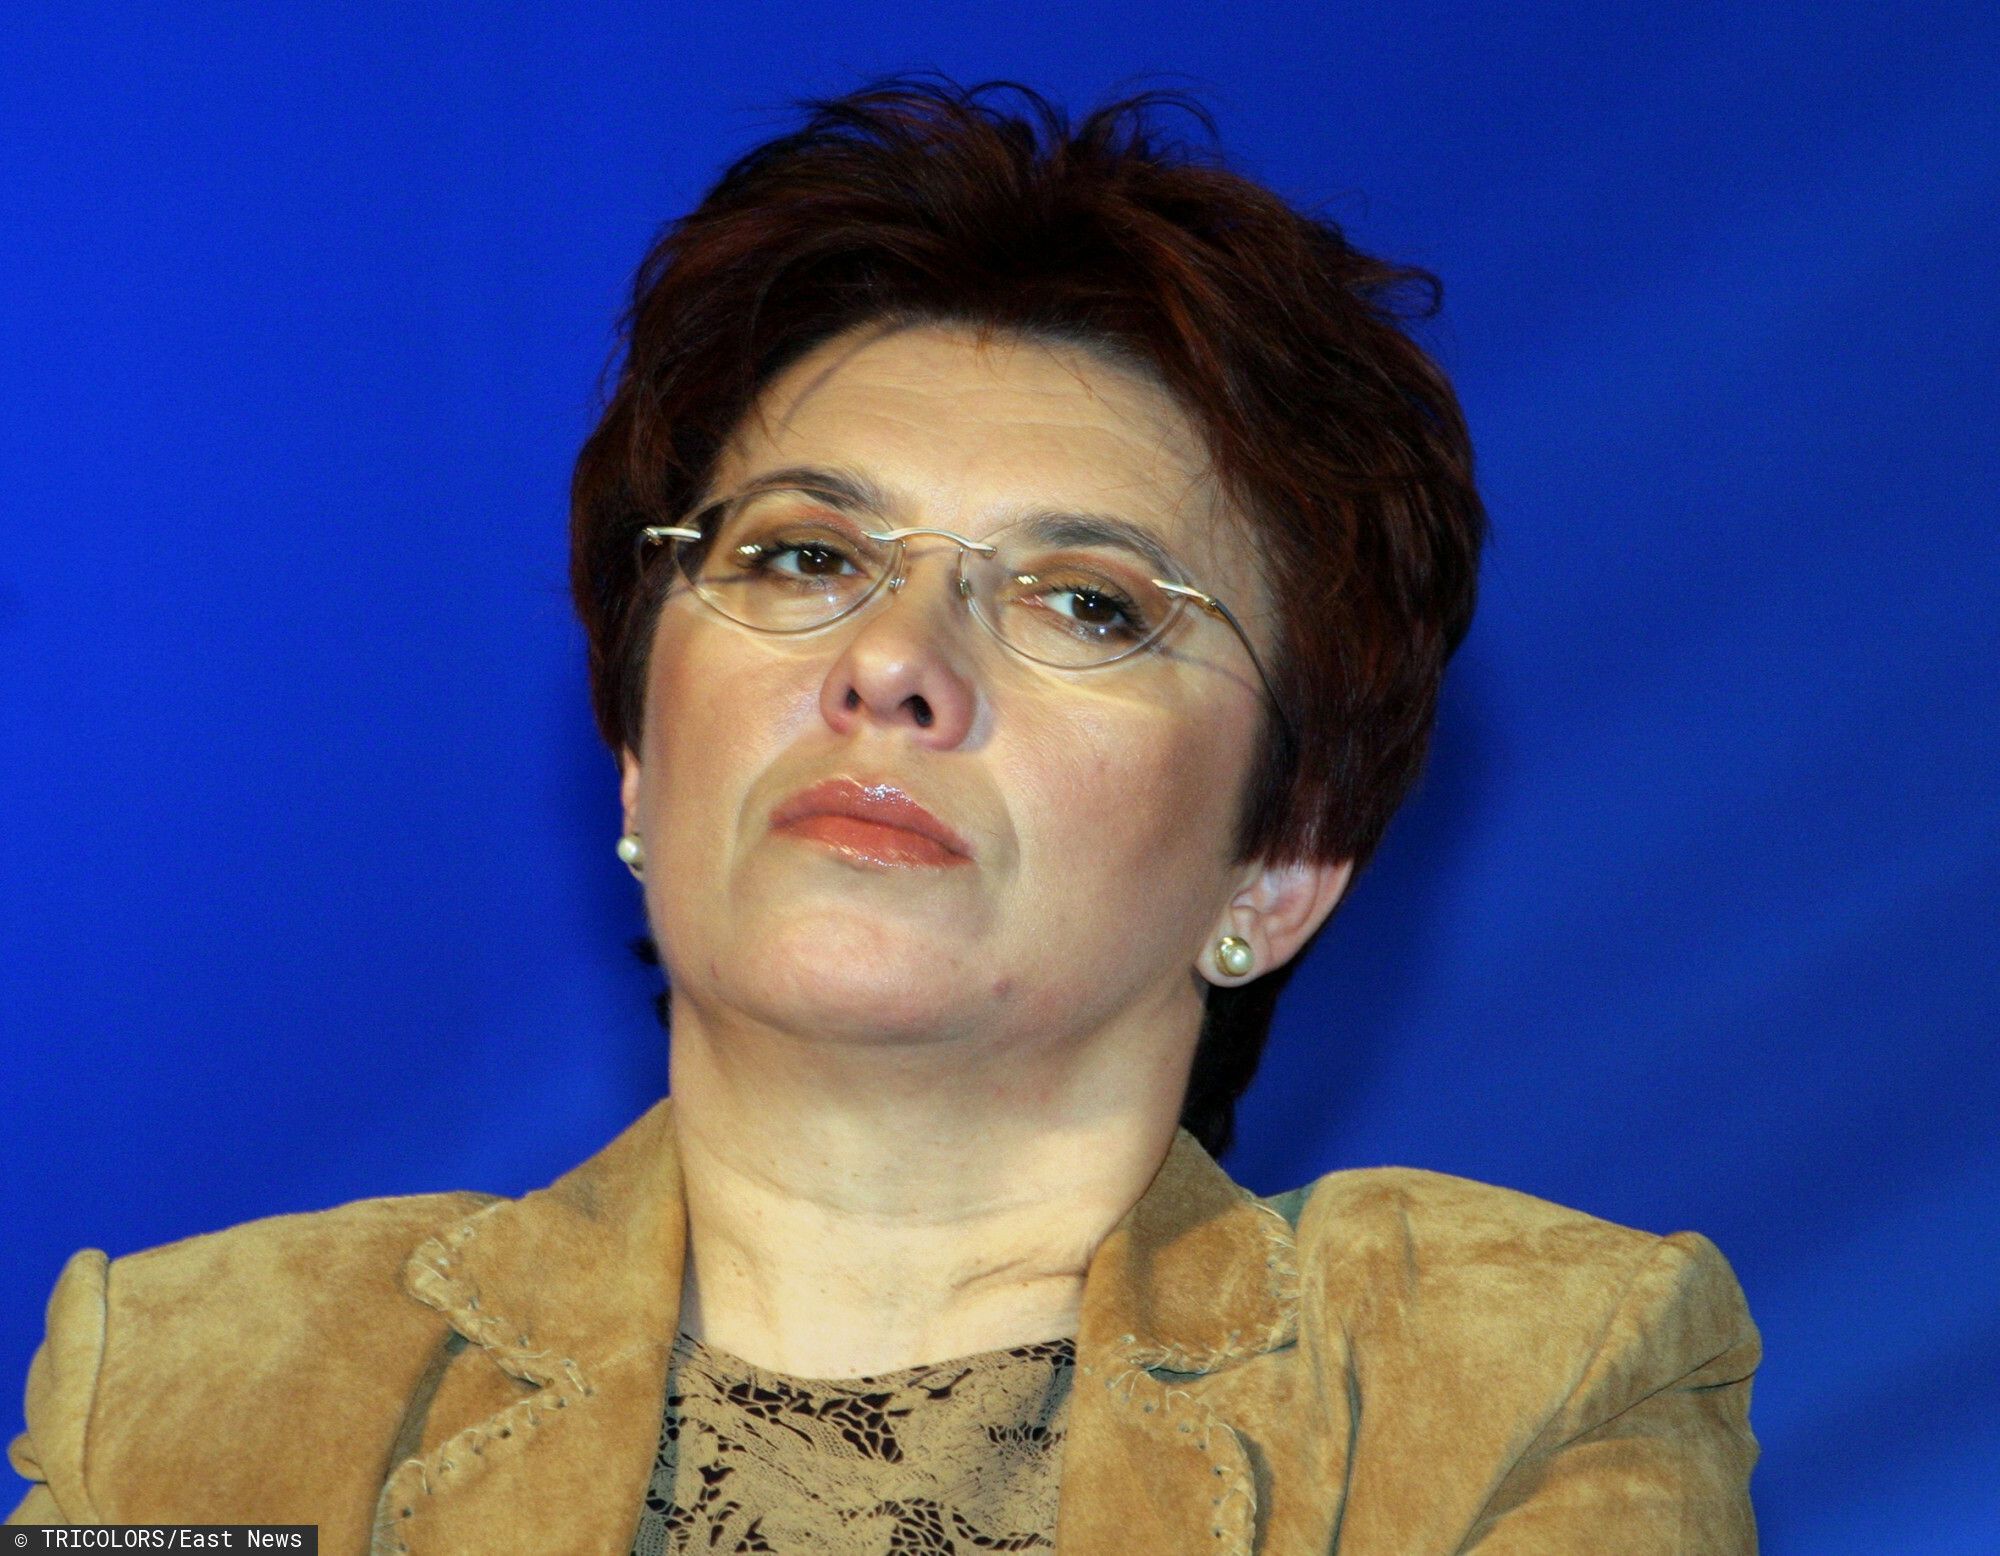 Marta Idzikowska